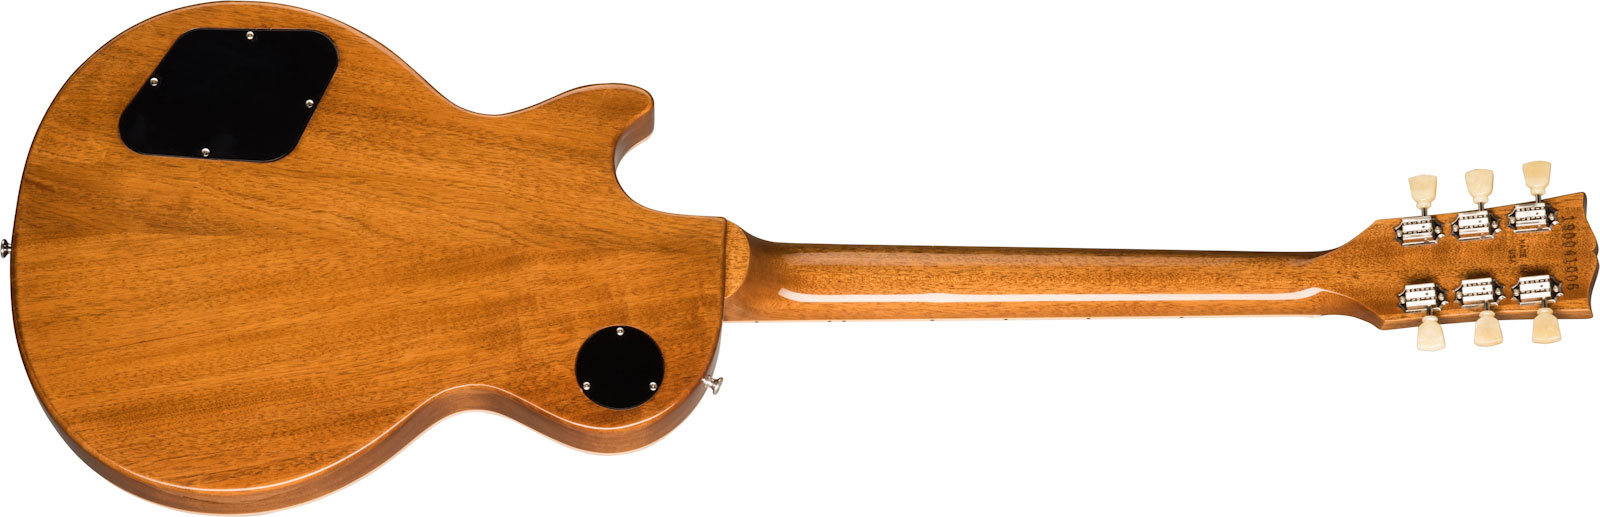 Gibson Les Paul Standard 50s Original 2h Ht Rw - Gold Top - Single cut electric guitar - Variation 1